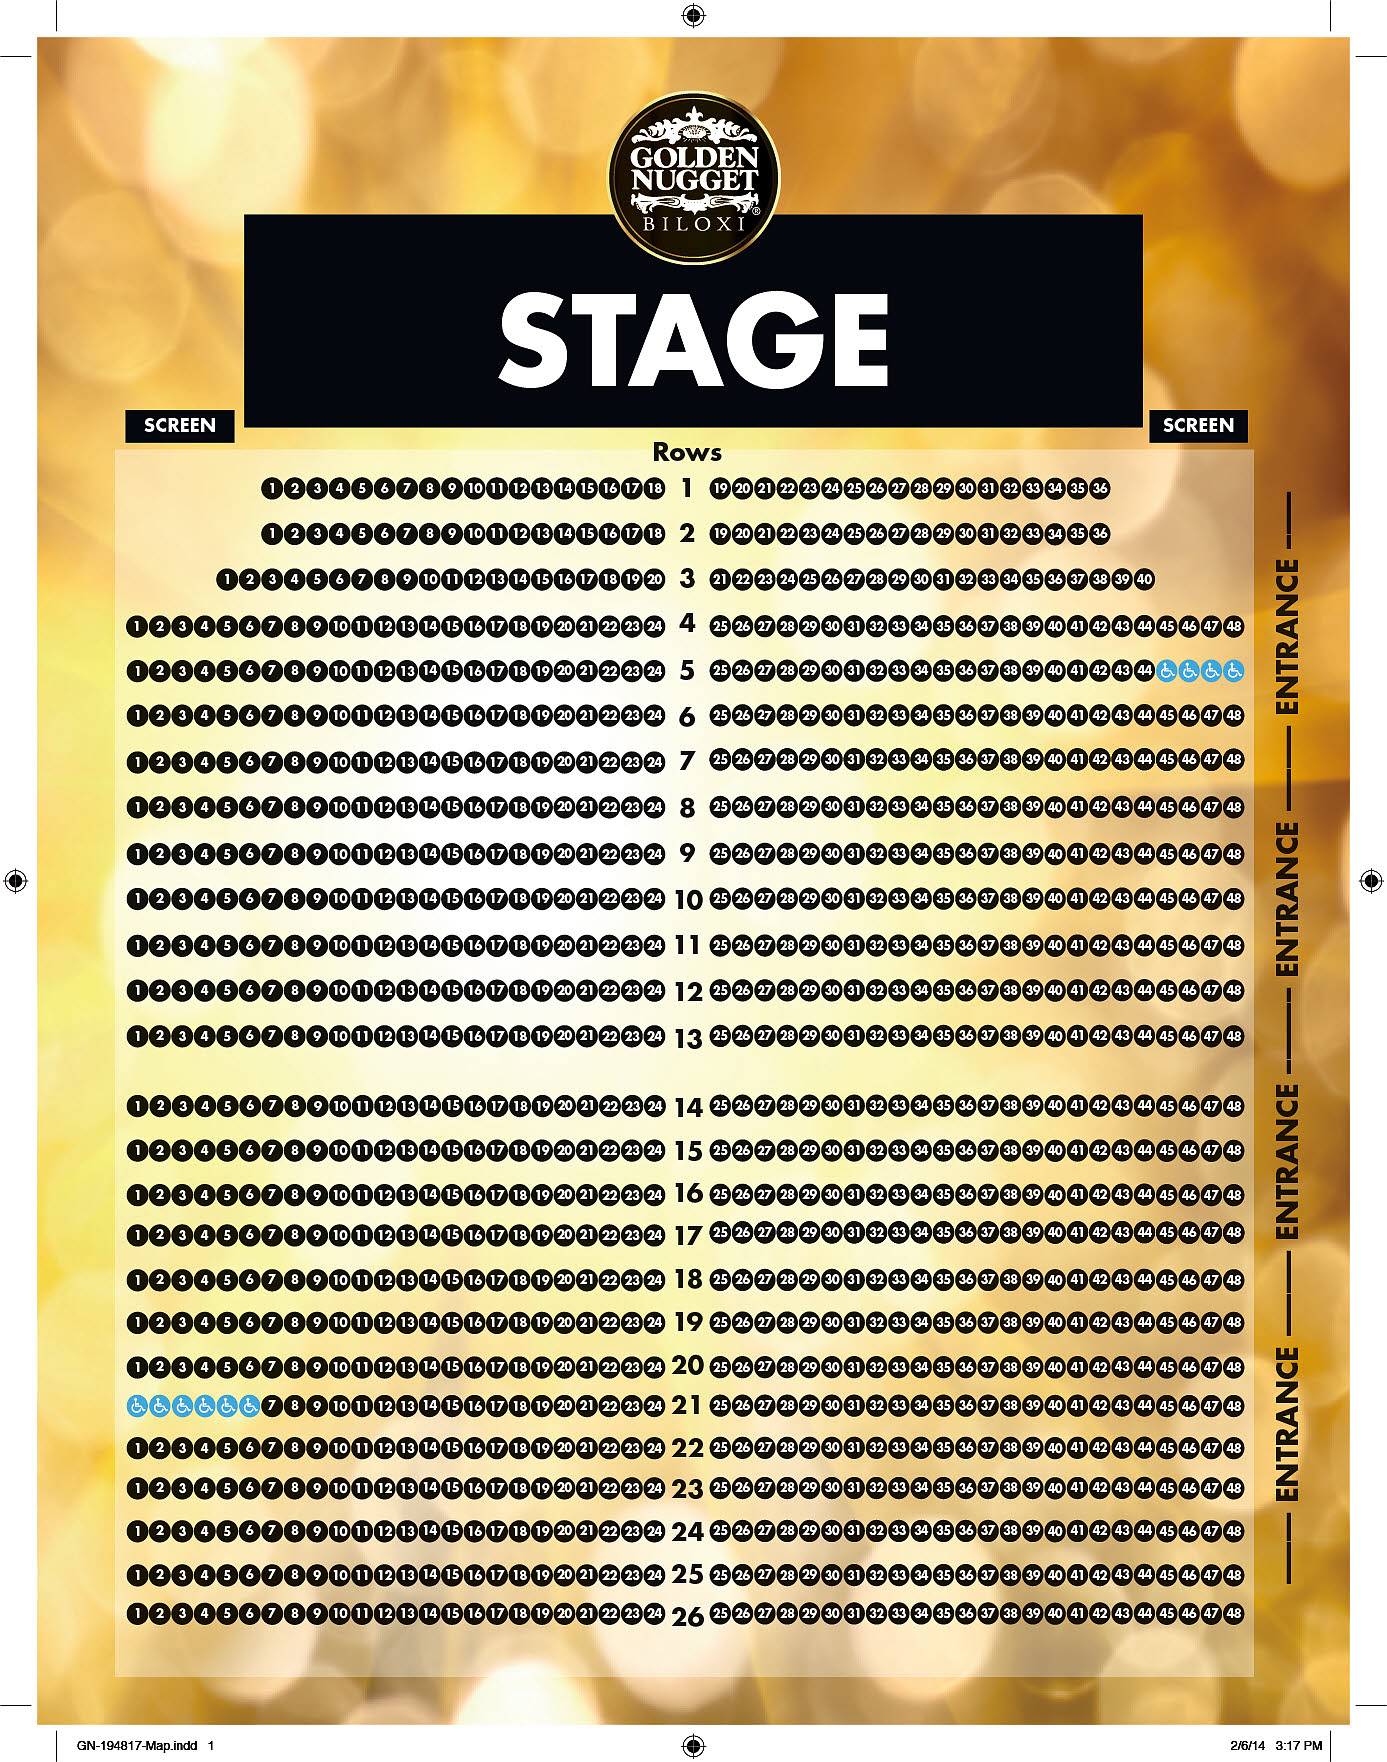 Golden Nugget Atlantic City Concert Seating Chart